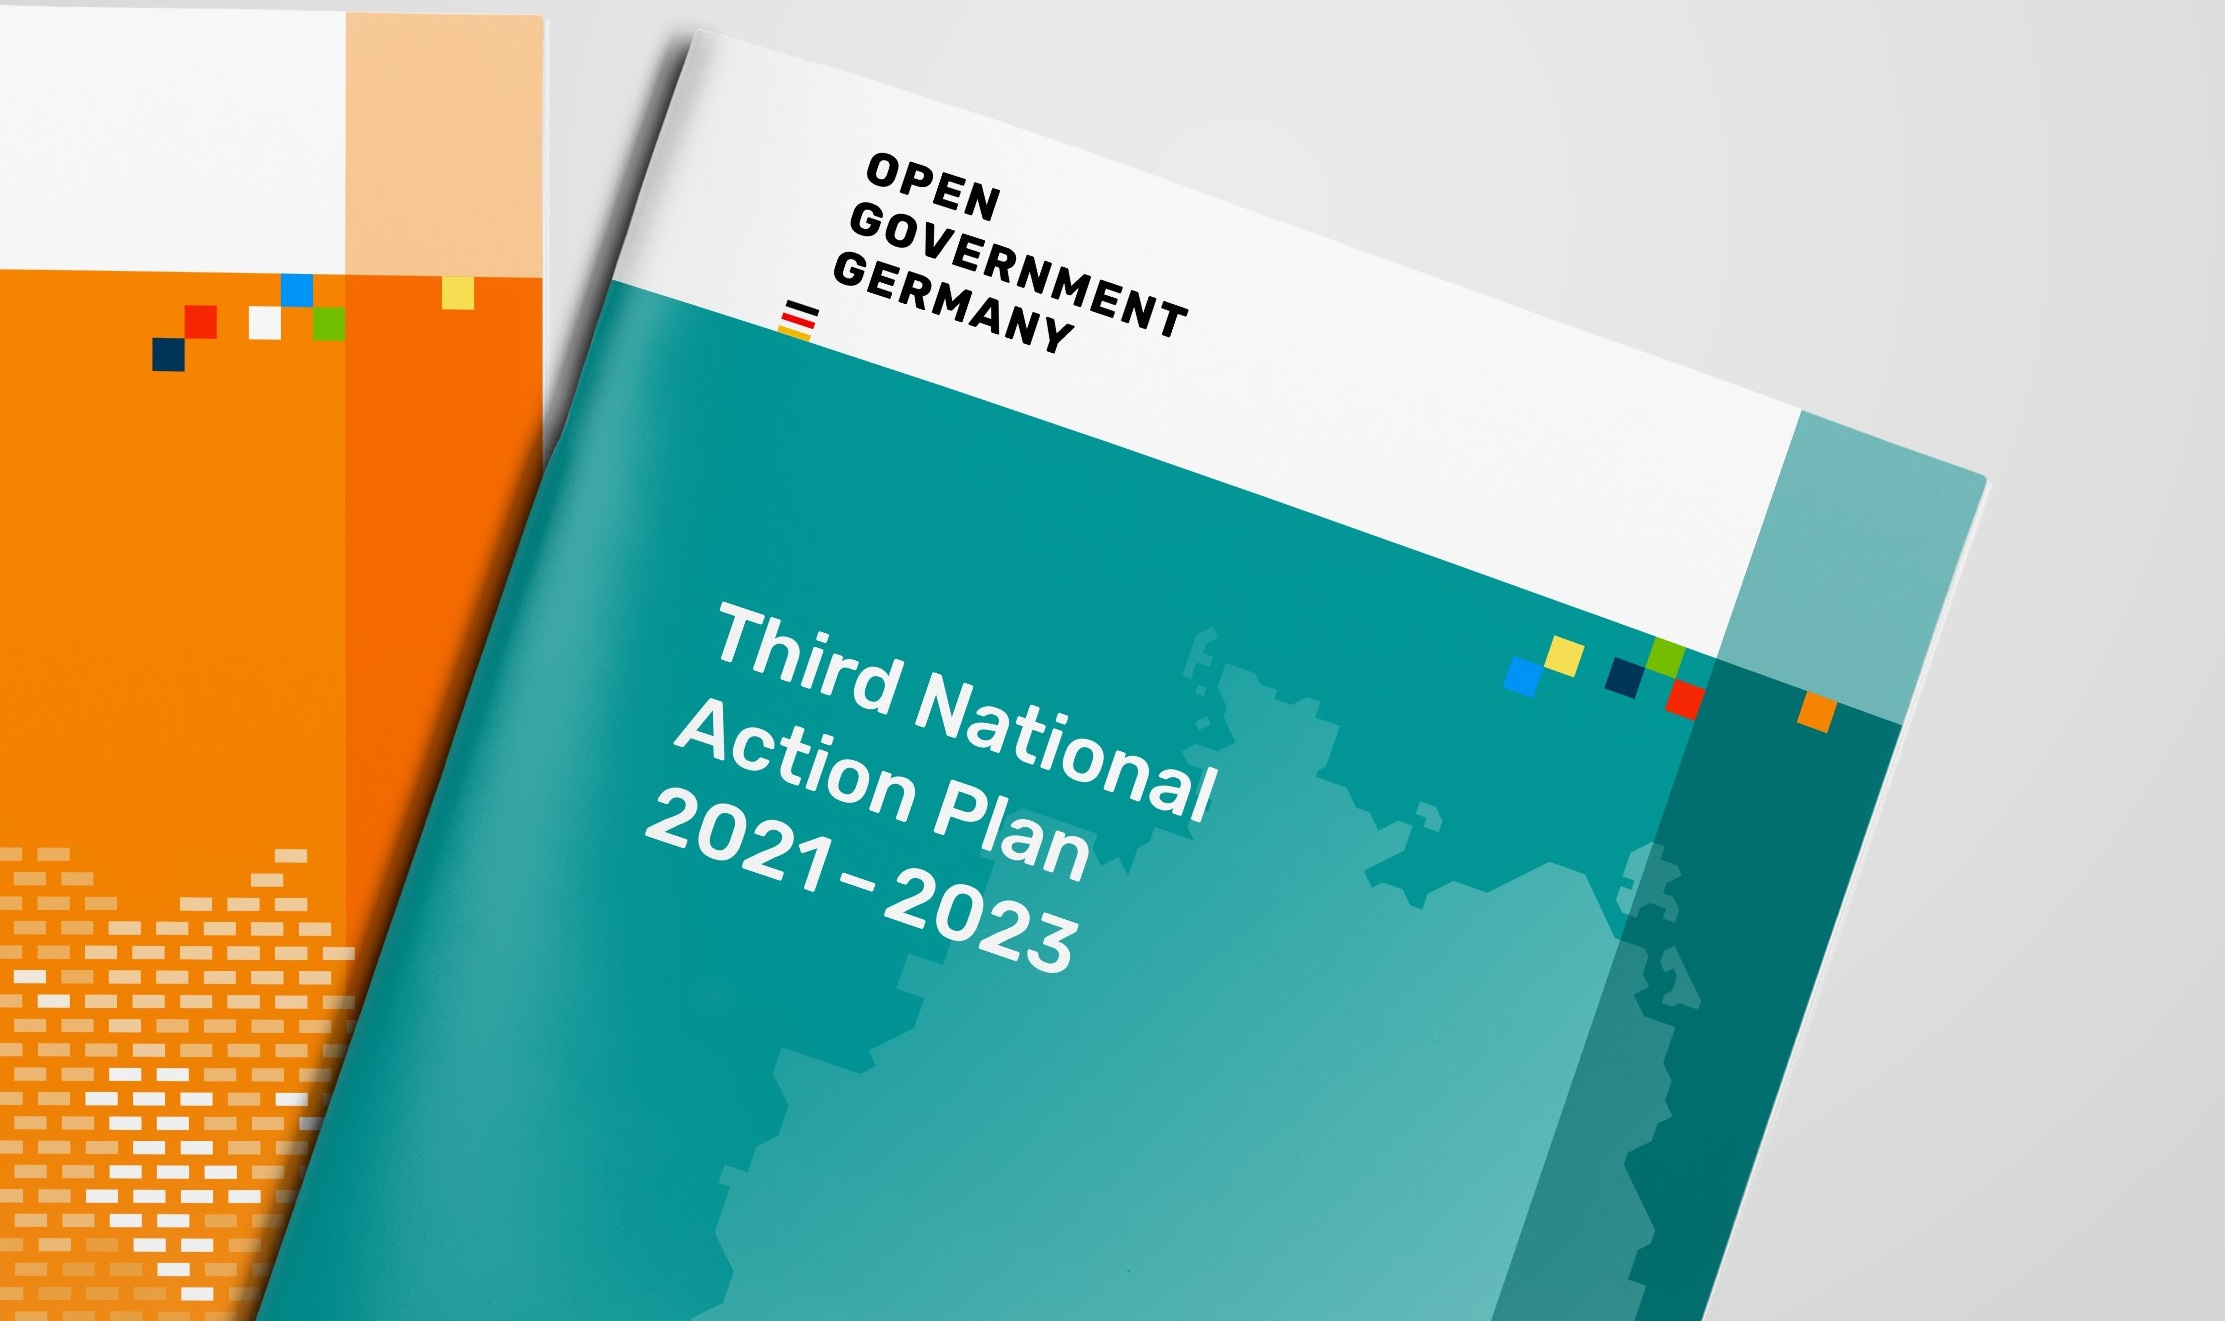 Third National Action Plan